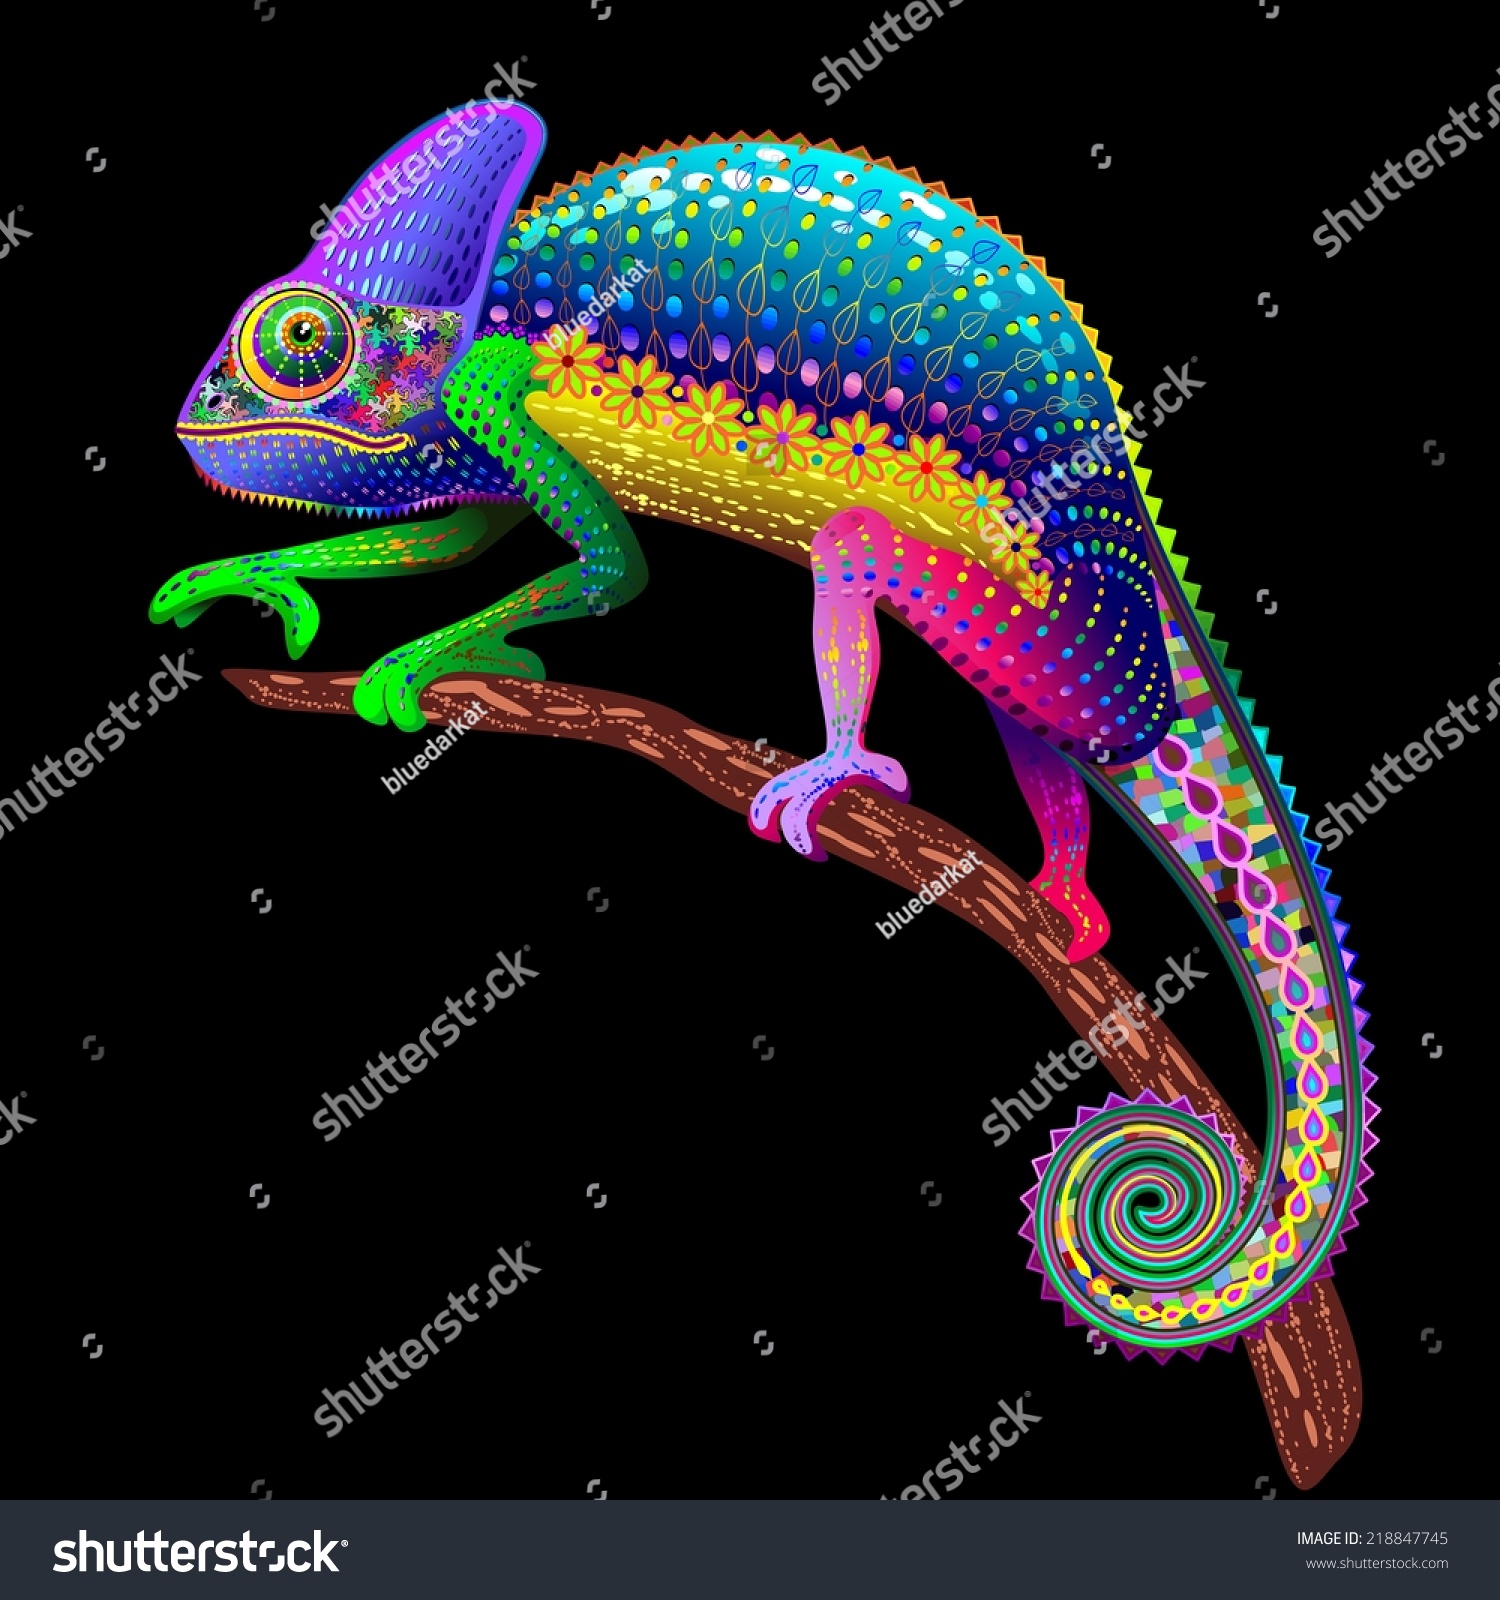 SVG of Chameleon Fantasy Rainbow Colors svg